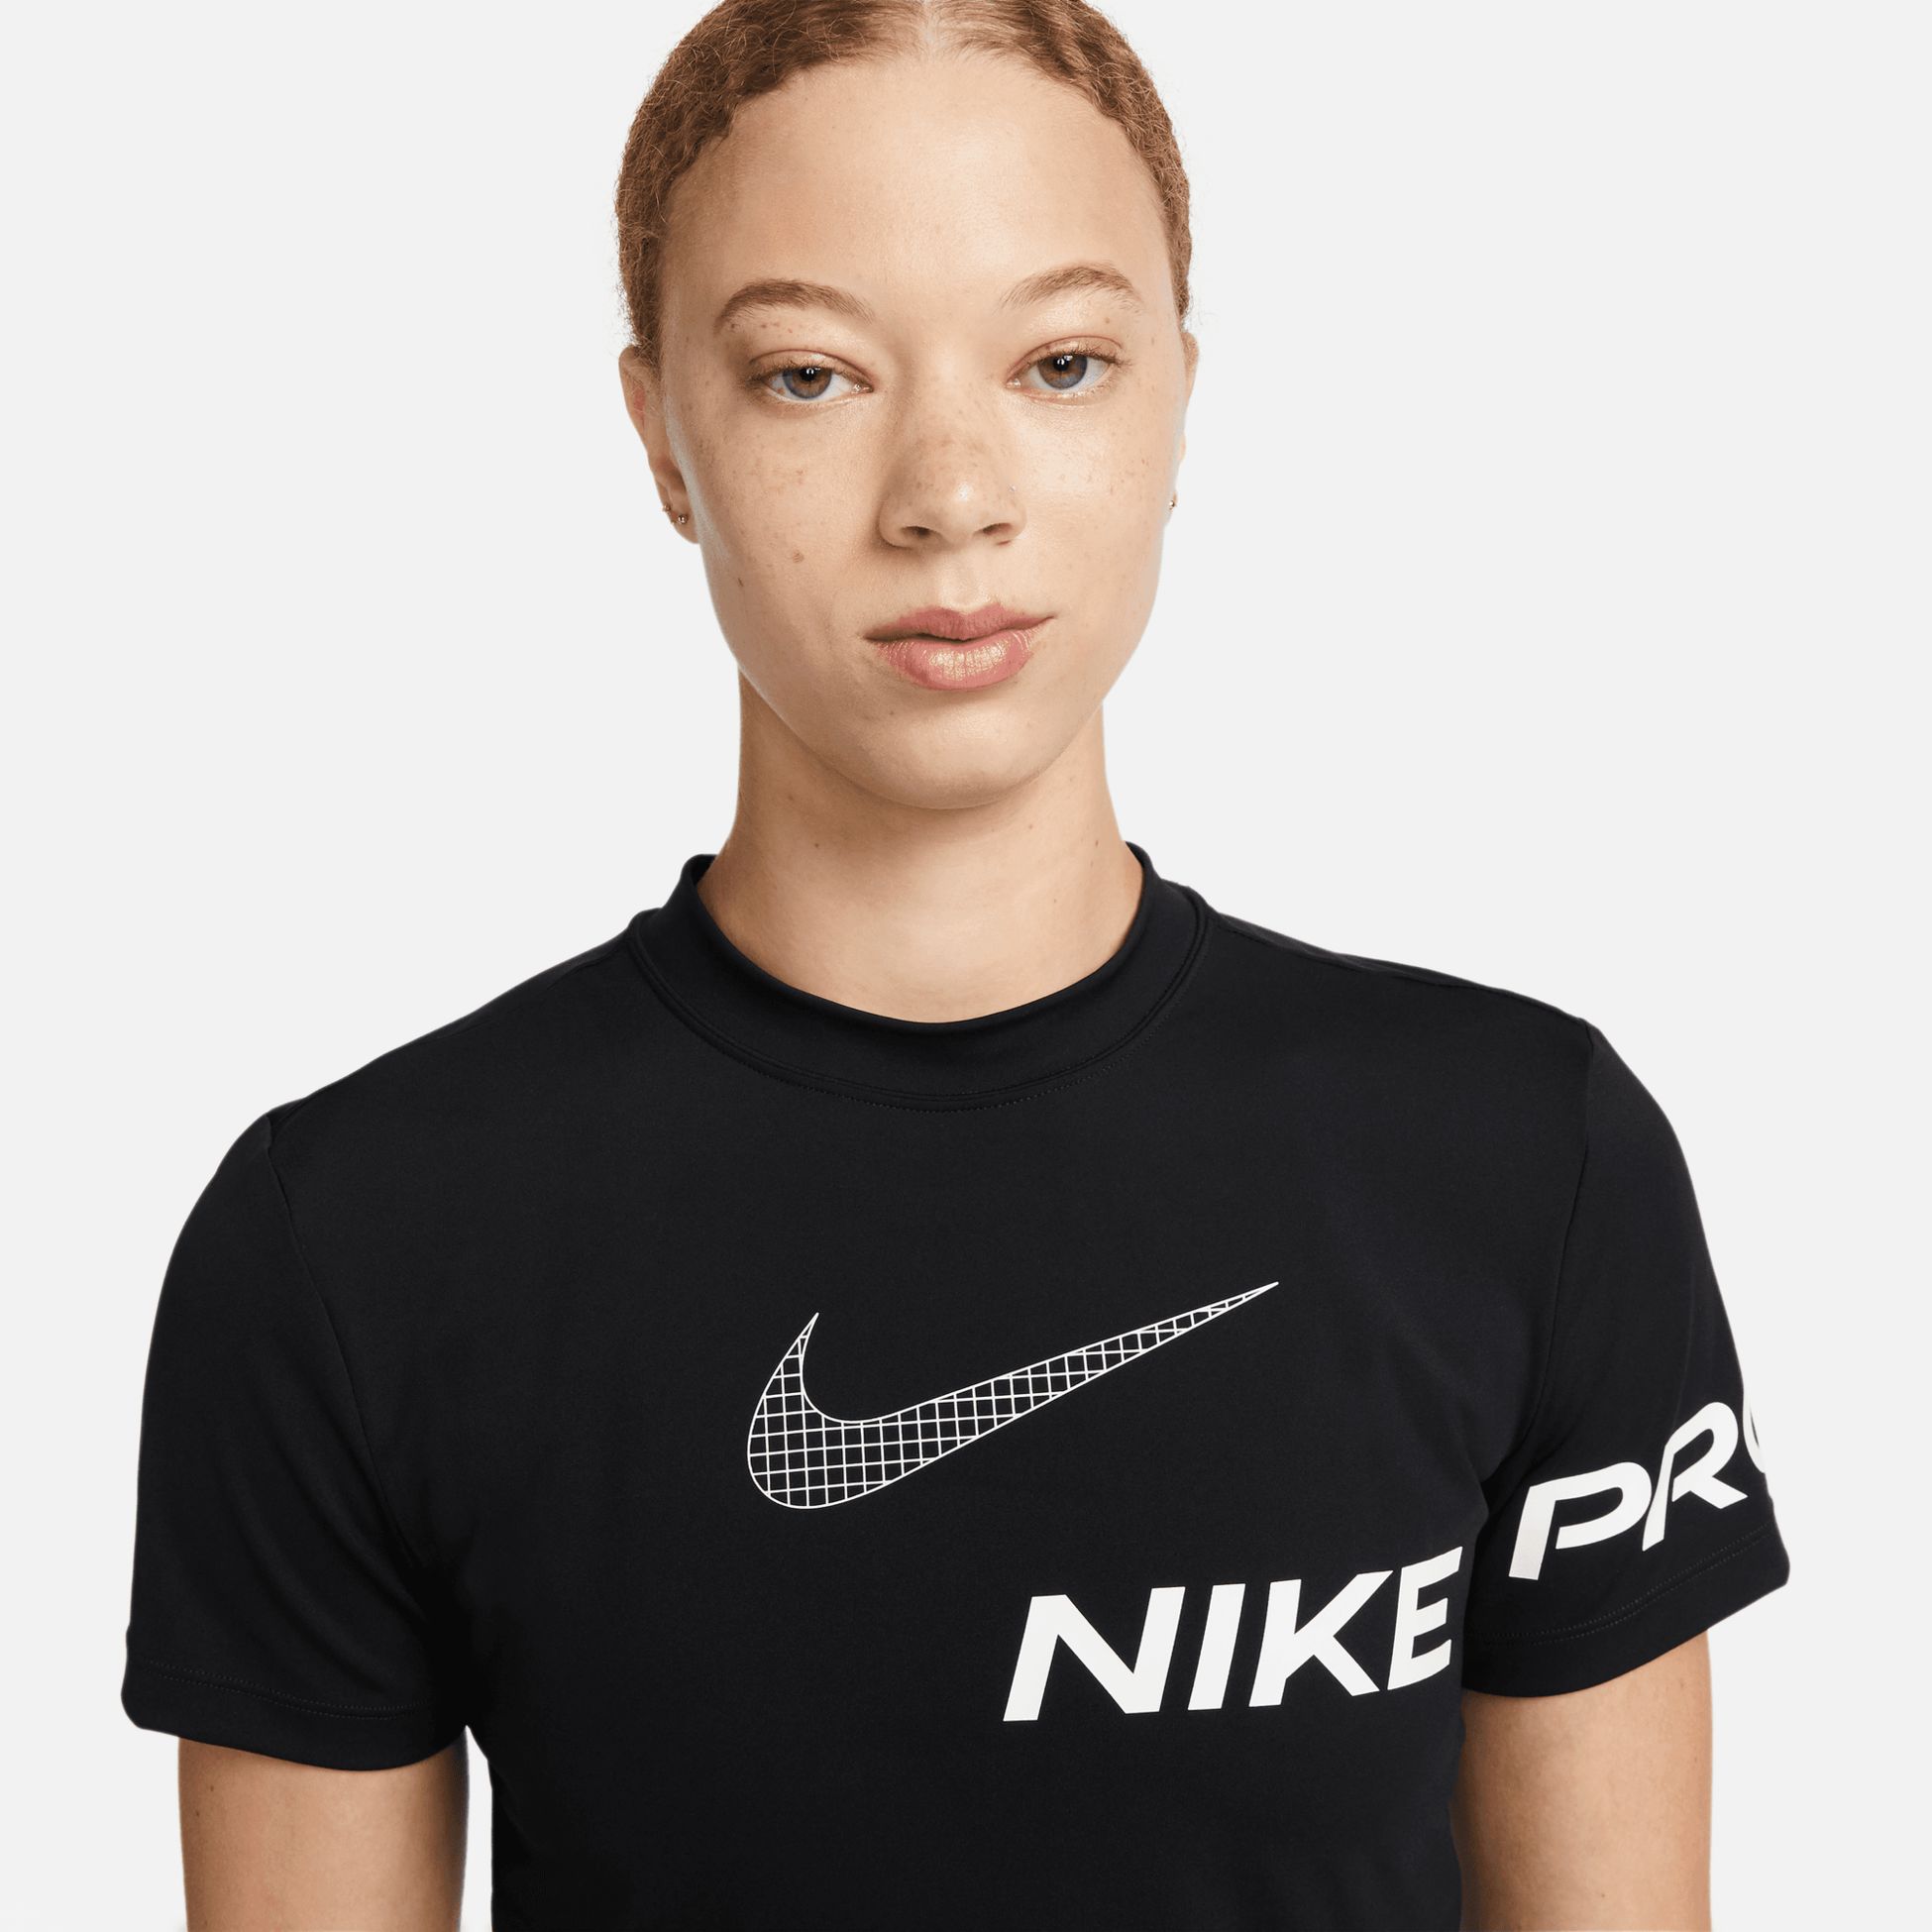 NIKE, NikePro Dri-FIT Women's Short Sleev